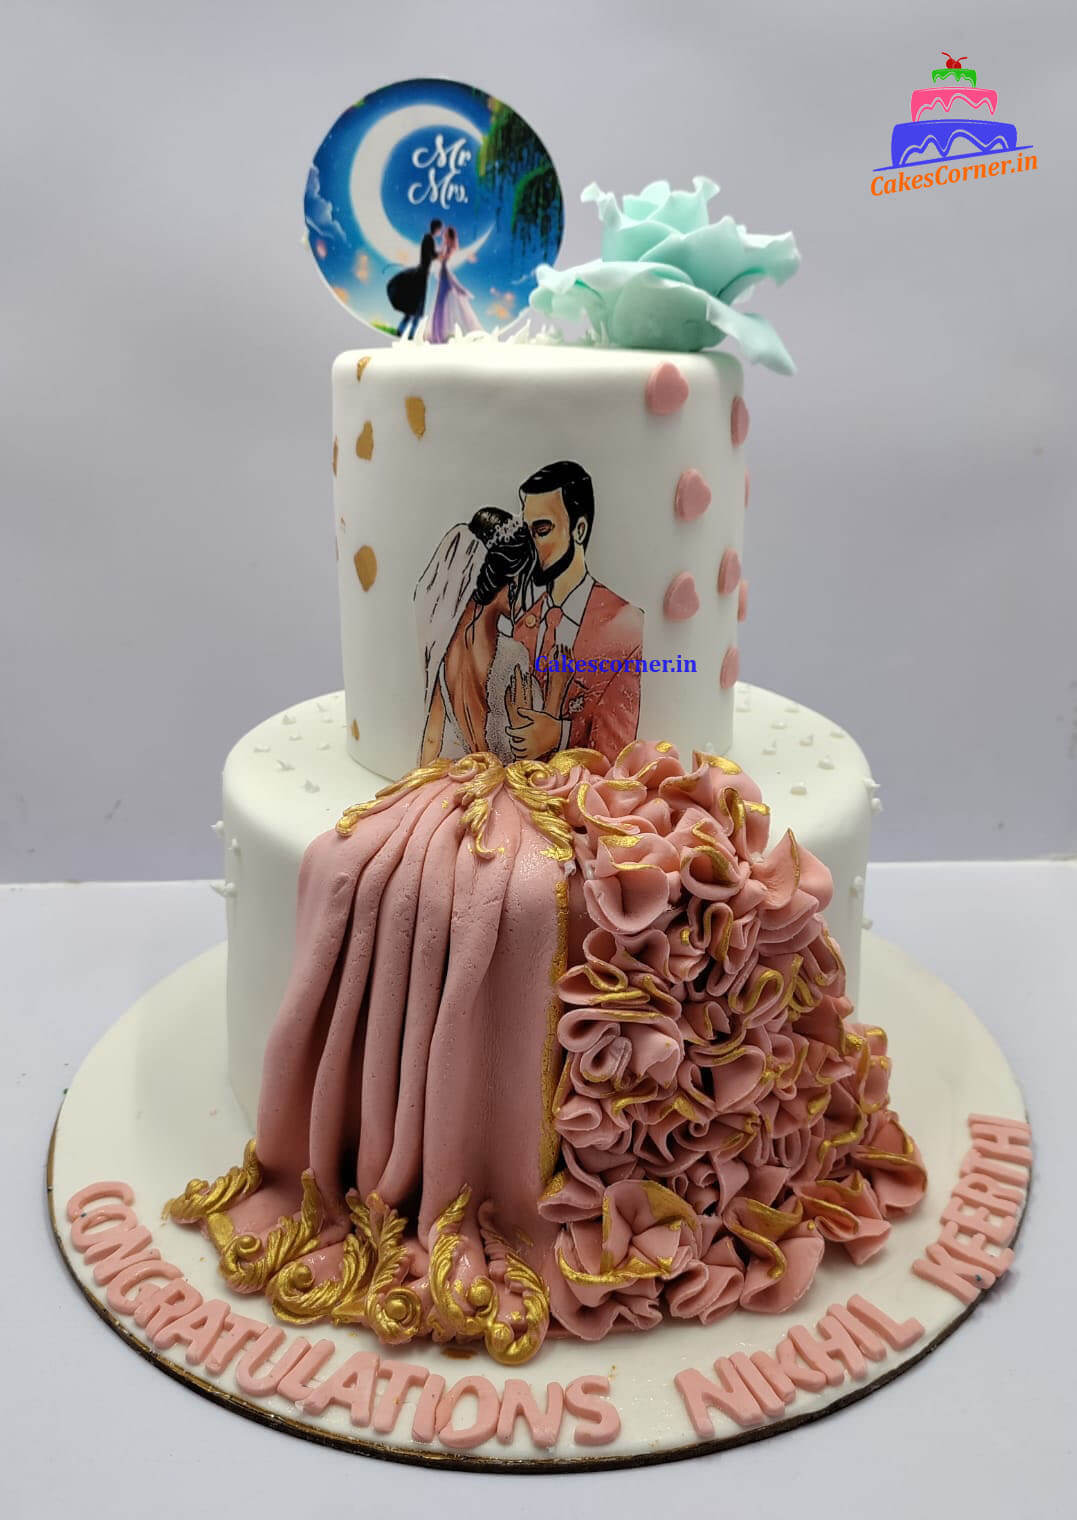 Best Engagement Cakes - Amarantos Cakes - 0458 778 780